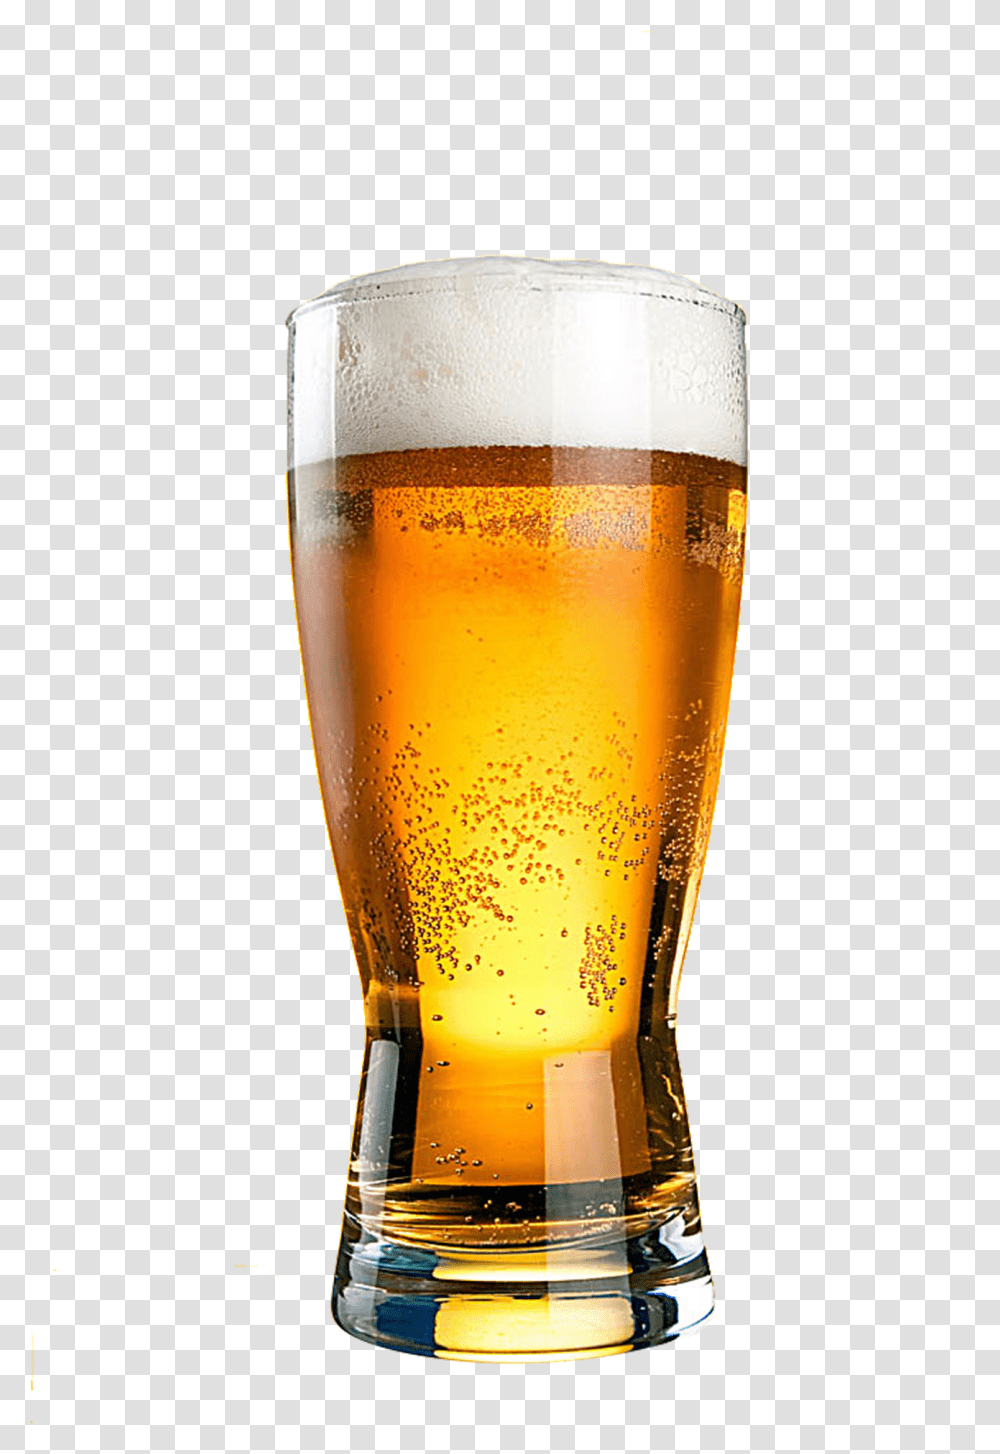 Background Beer Glass Image Free Download Glass Of Beer, Alcohol, Beverage, Drink, Lager Transparent Png